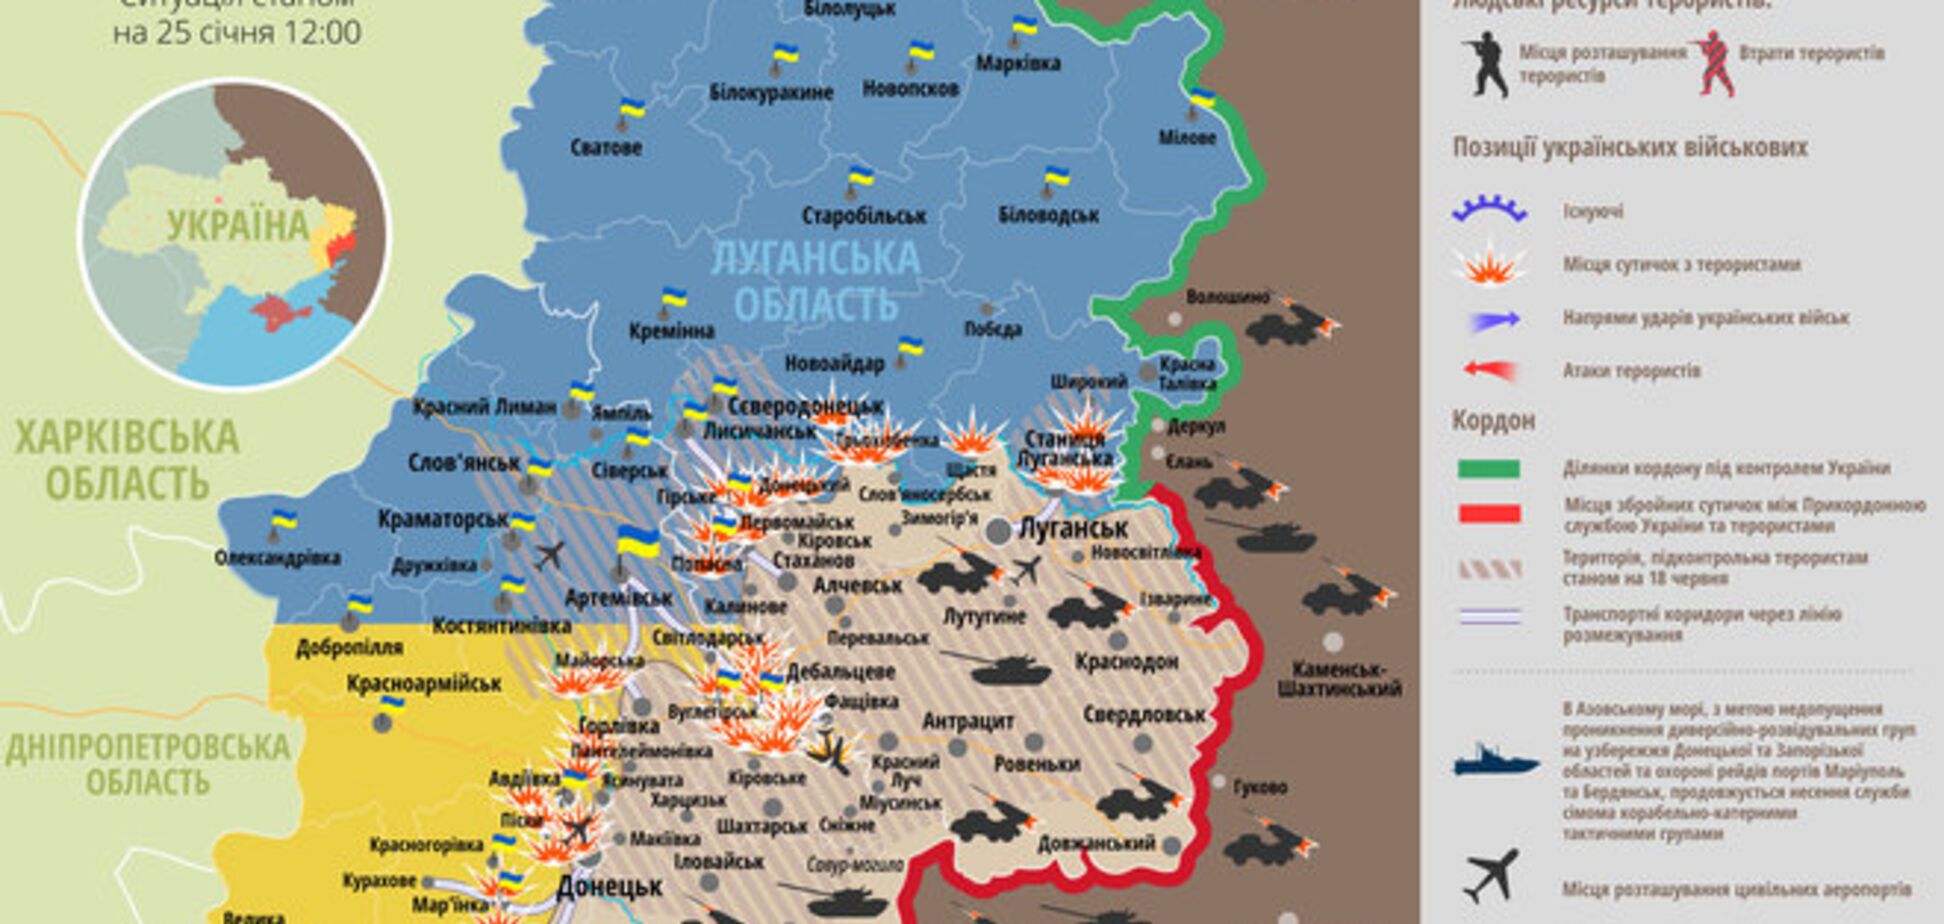 За сутки погибло четверо украинских воинов: карта АТО